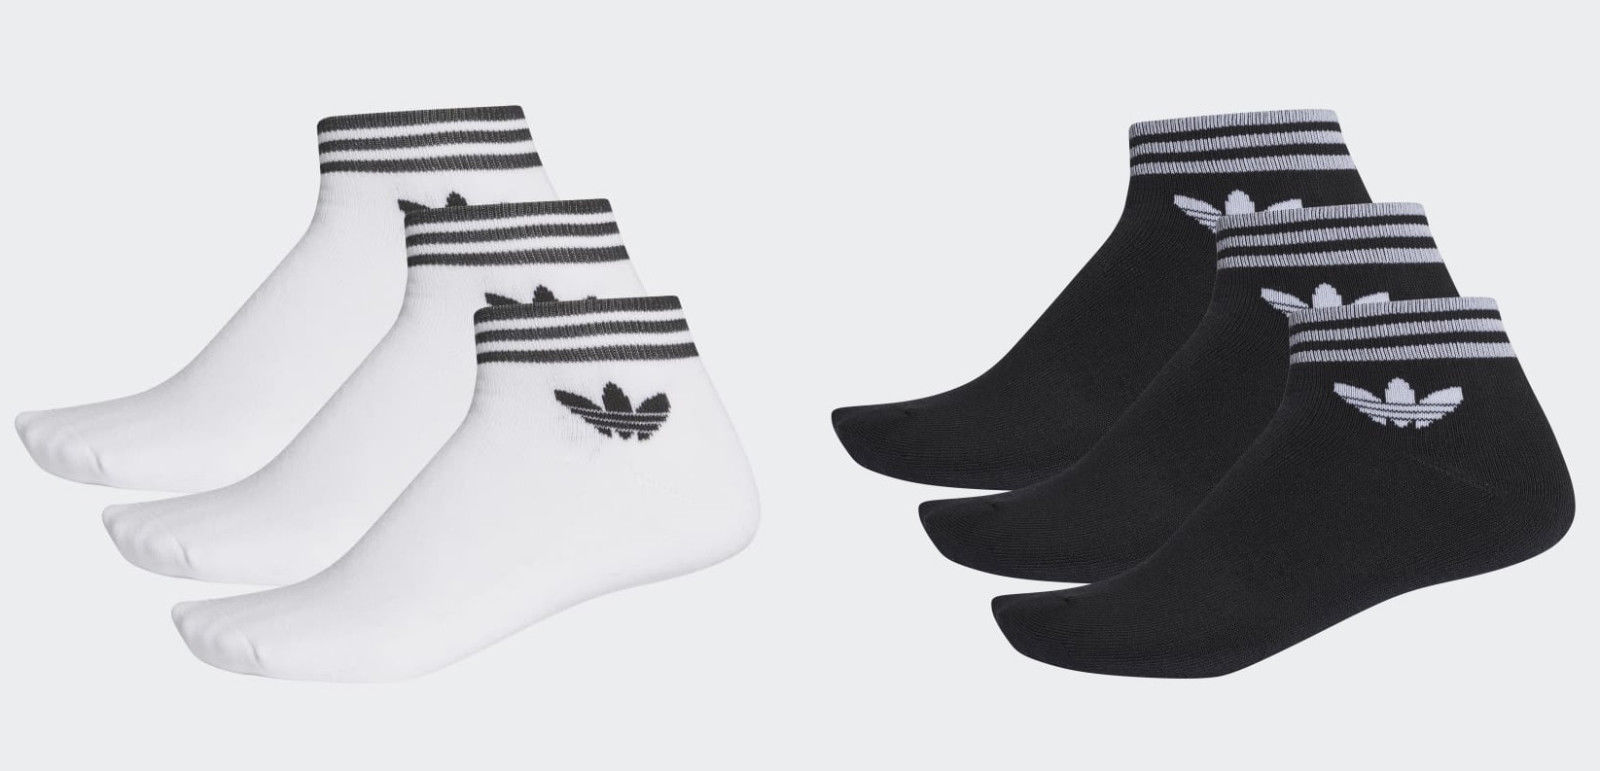 Adidas Originals 3 Pack Ankle Socks In Black AZ5523 Adidas ktmart.vn 10